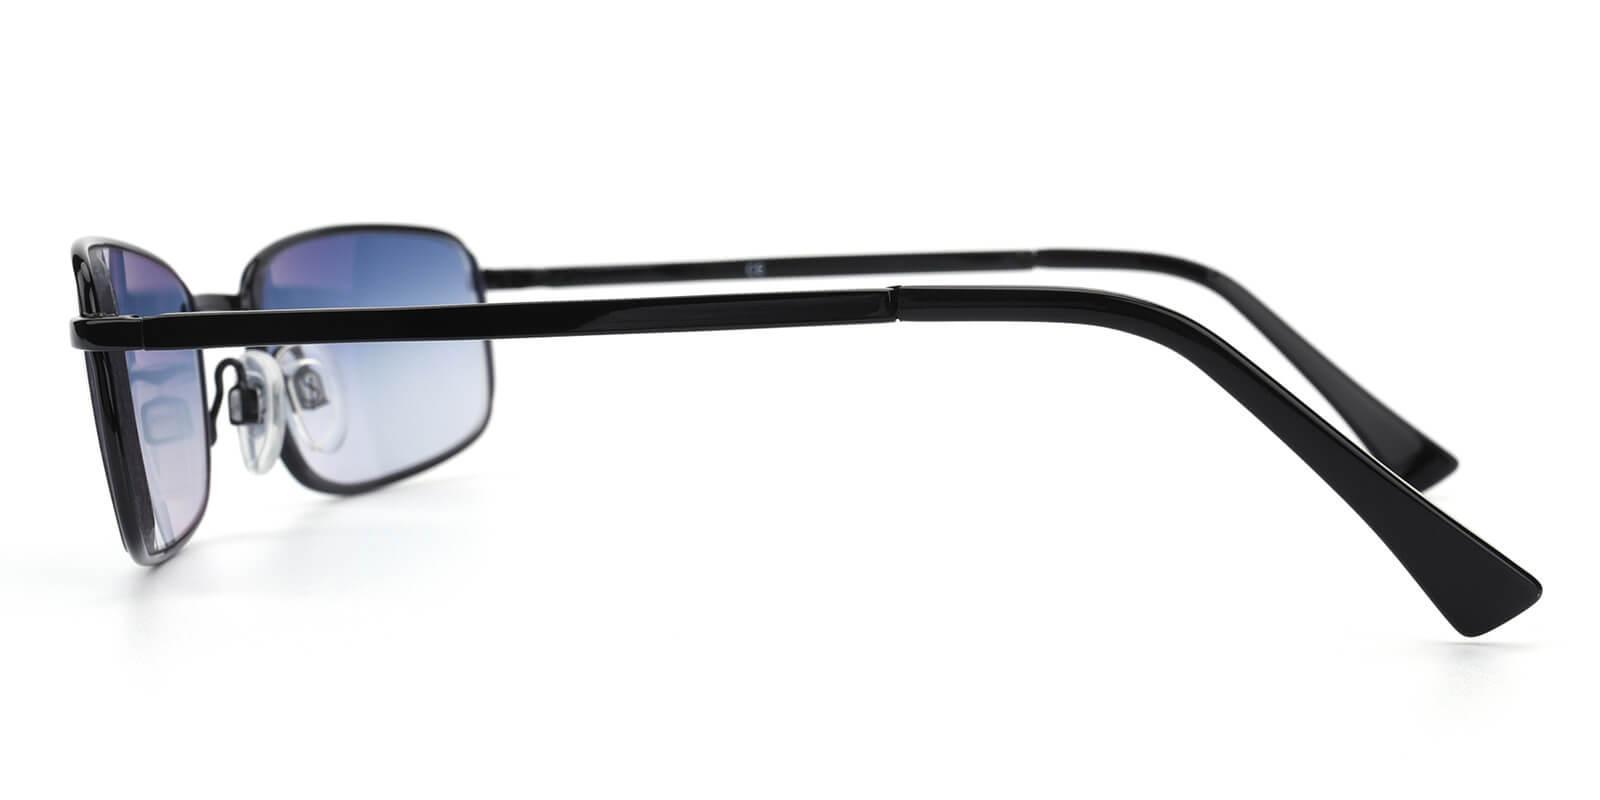 Sam Black Metal NosePads , SpringHinges , Sunglasses Frames from ABBE Glasses